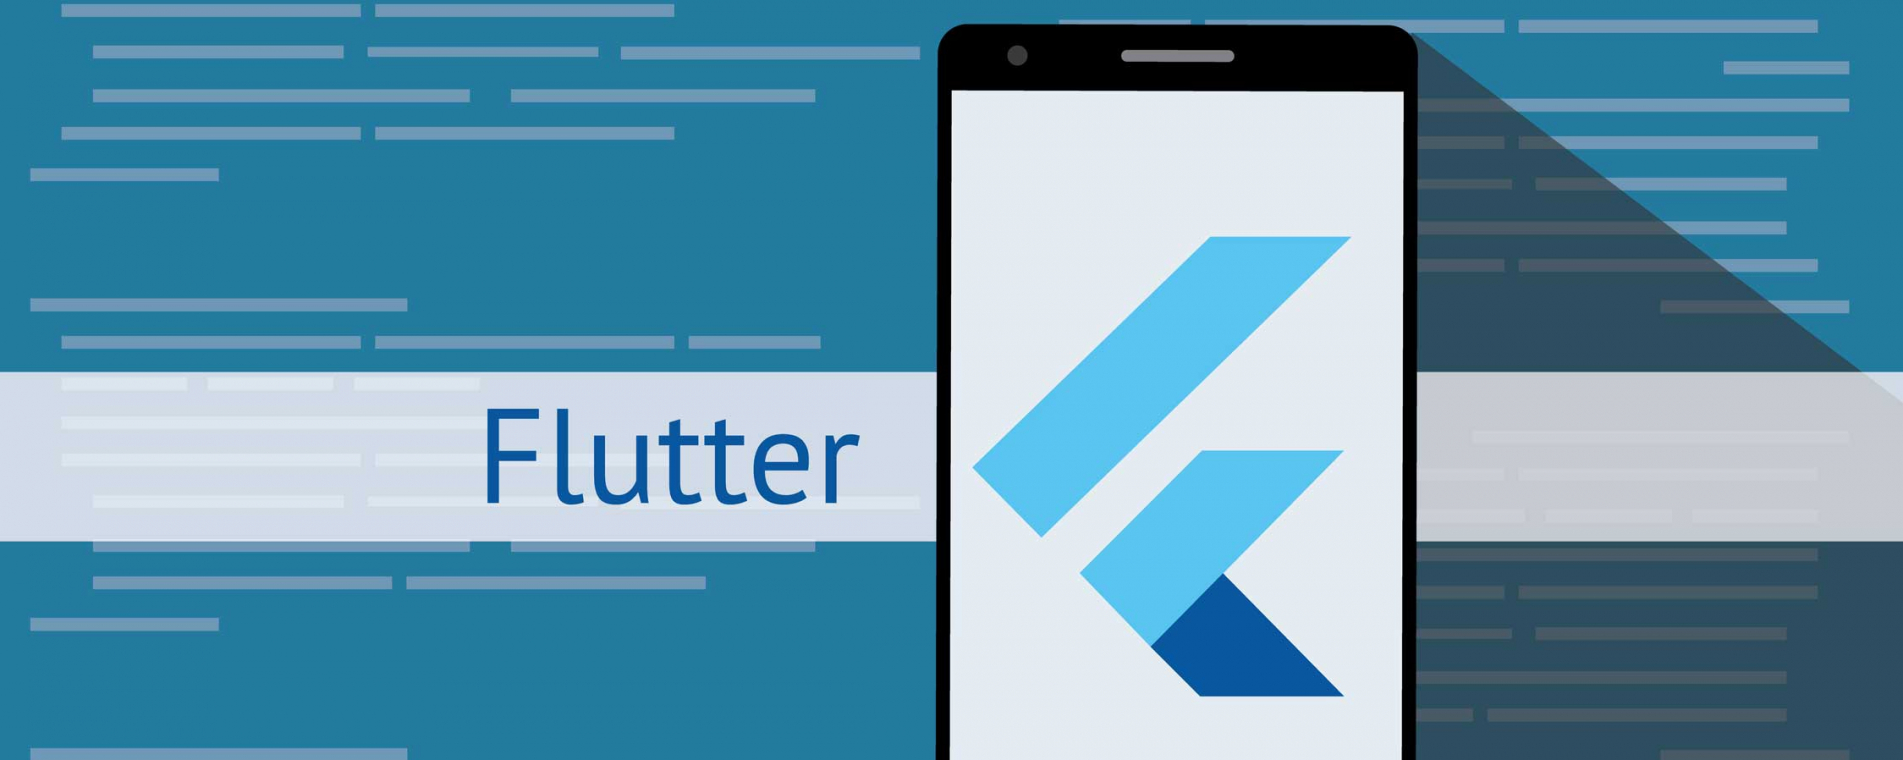 Flutter - Apps for any screen